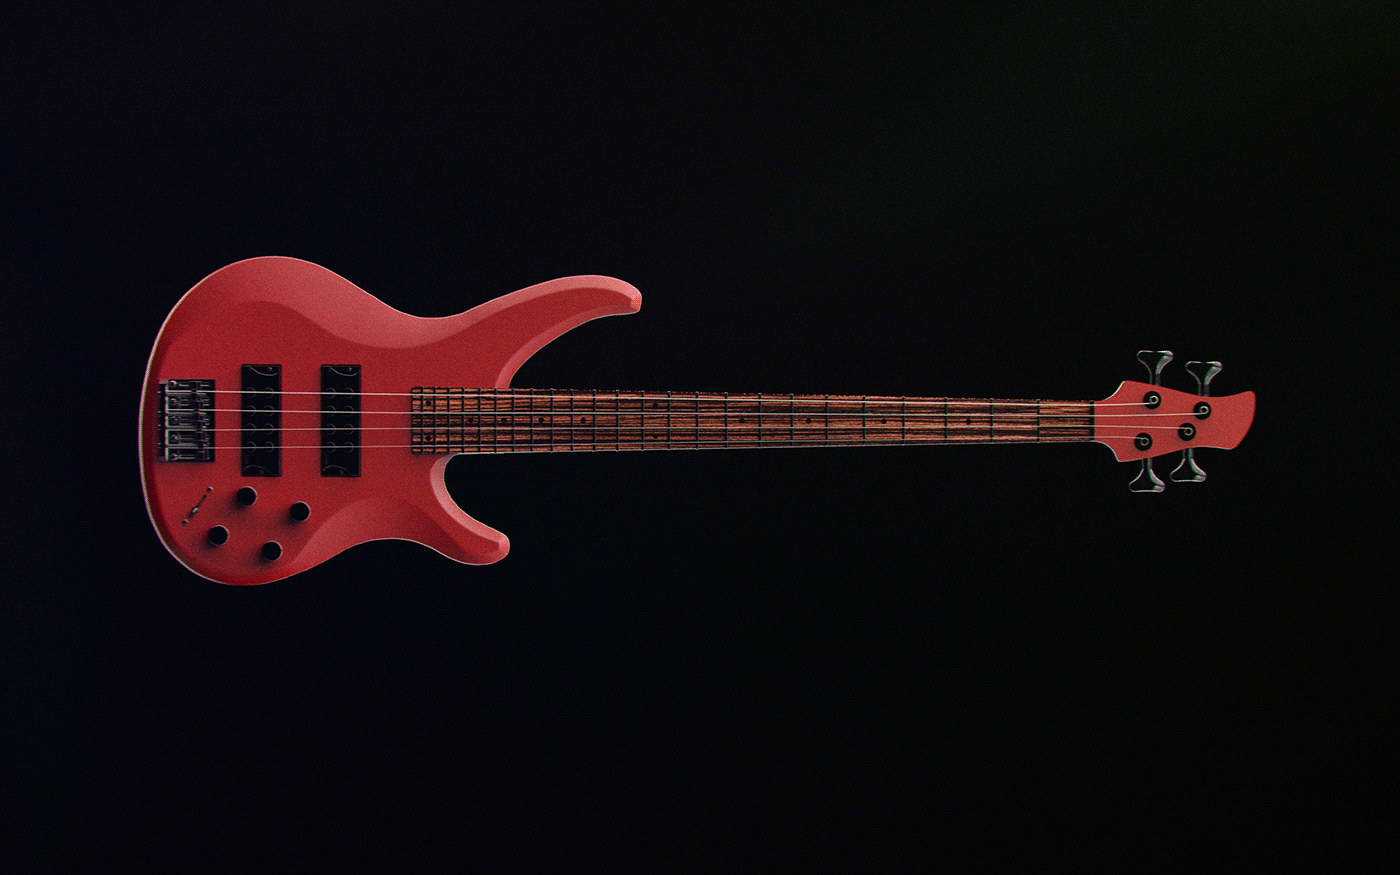 3D XSI softimage redshift music bass guitar